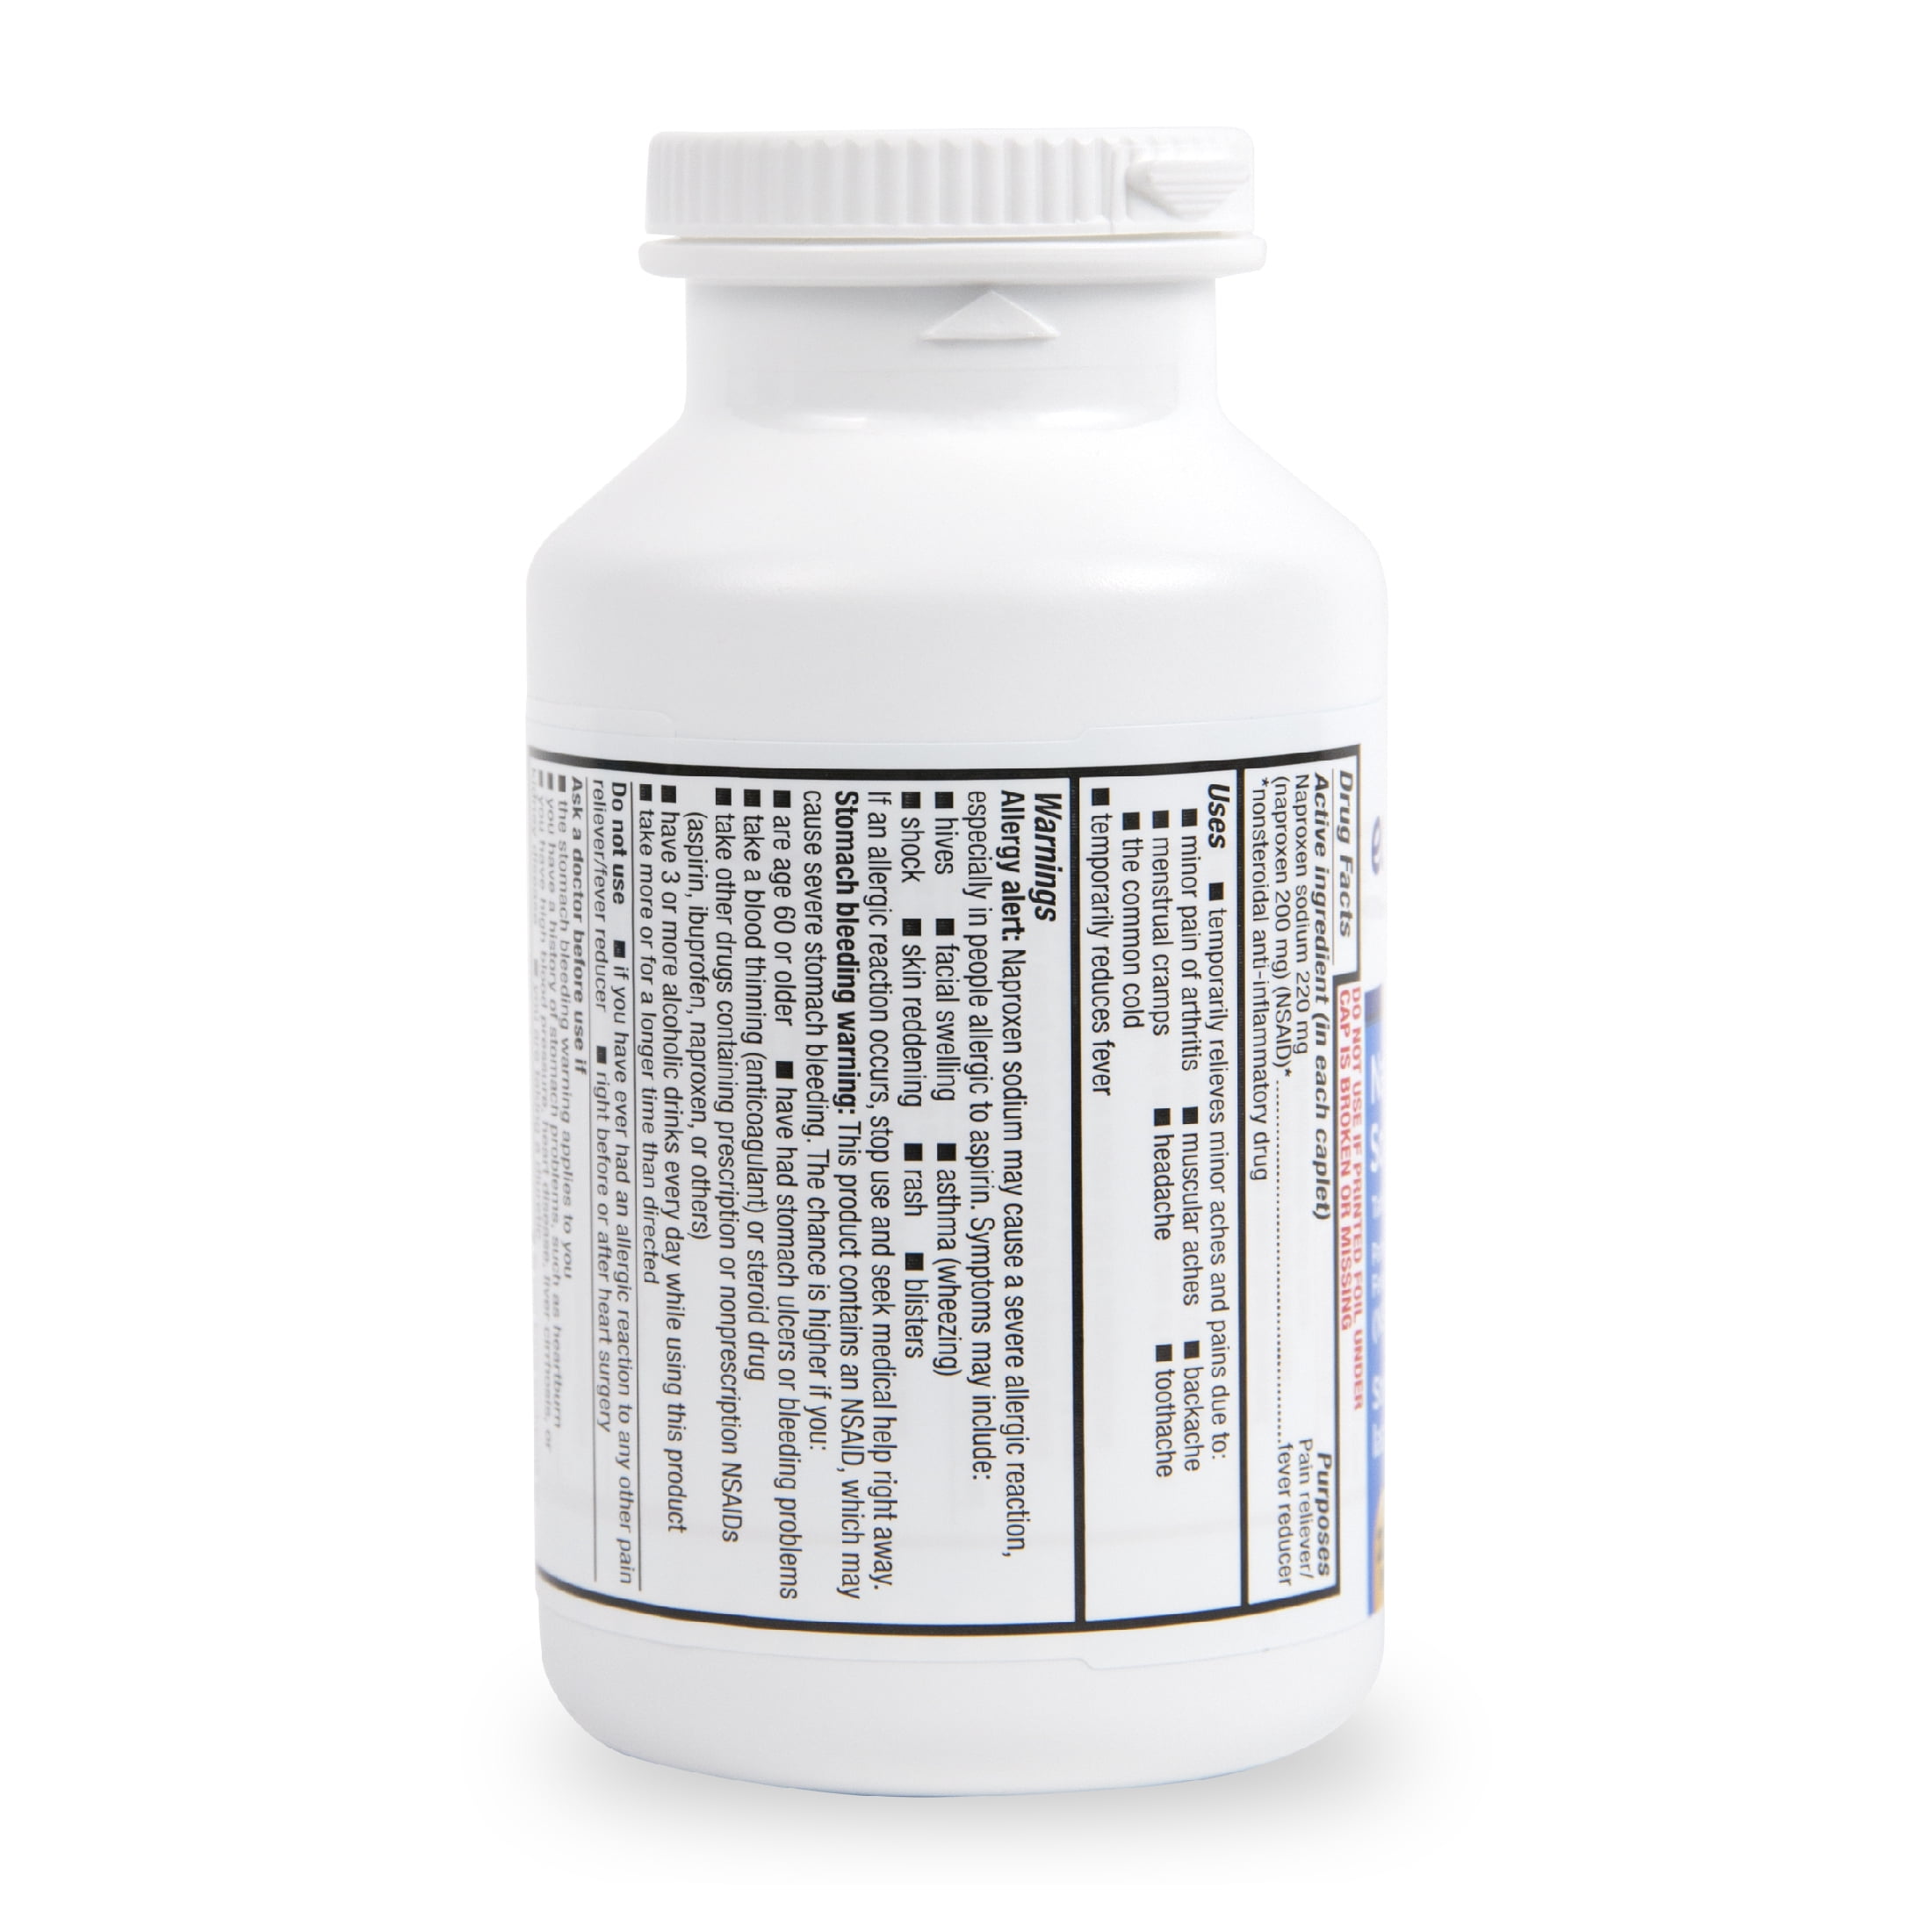 Equate Pain Relief Naproxen Sodium Caplets 220 Mg 300 Ct Walmartcom